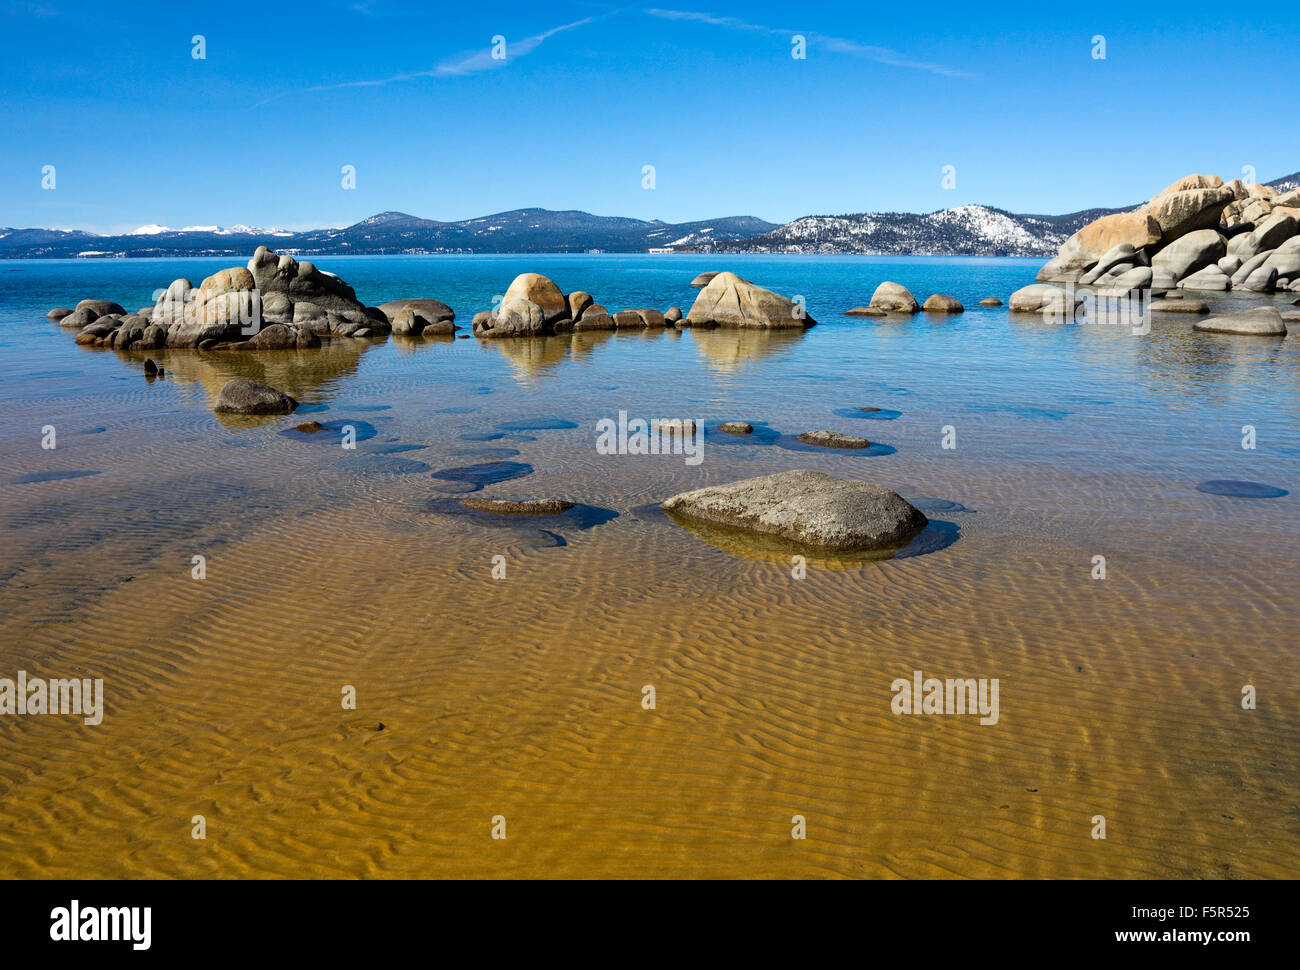 Big rocks in Lake Tahoe Stock Photo